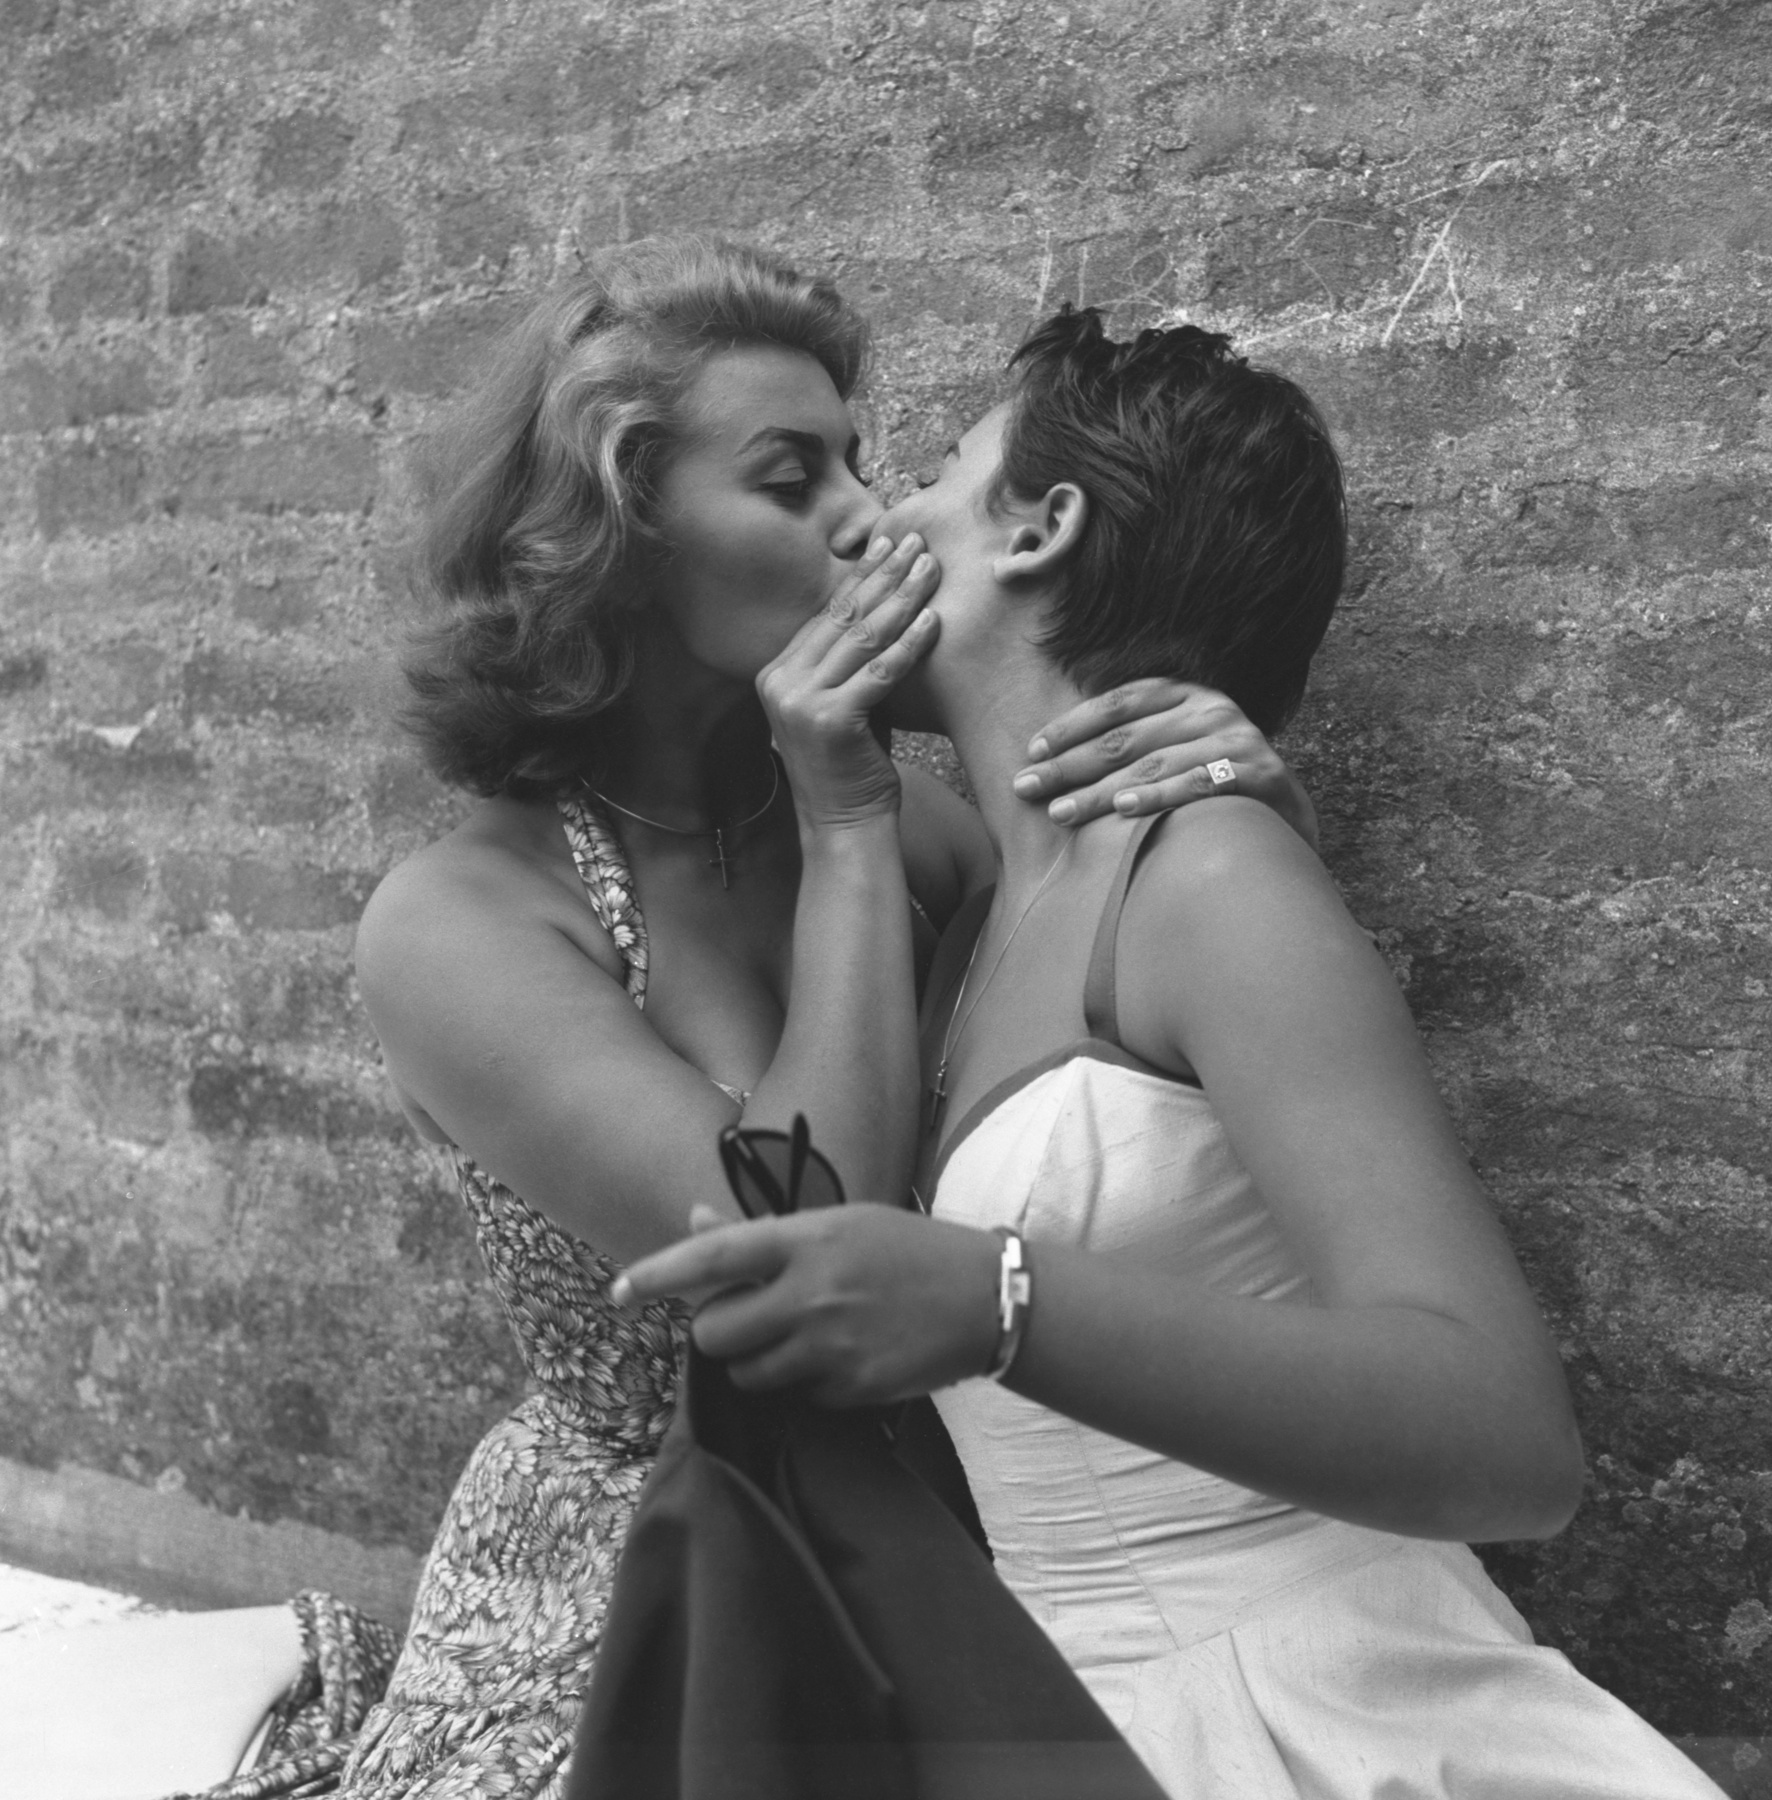 Celebrities old photos: Sophia Loren kissing her sister, Venice 1955